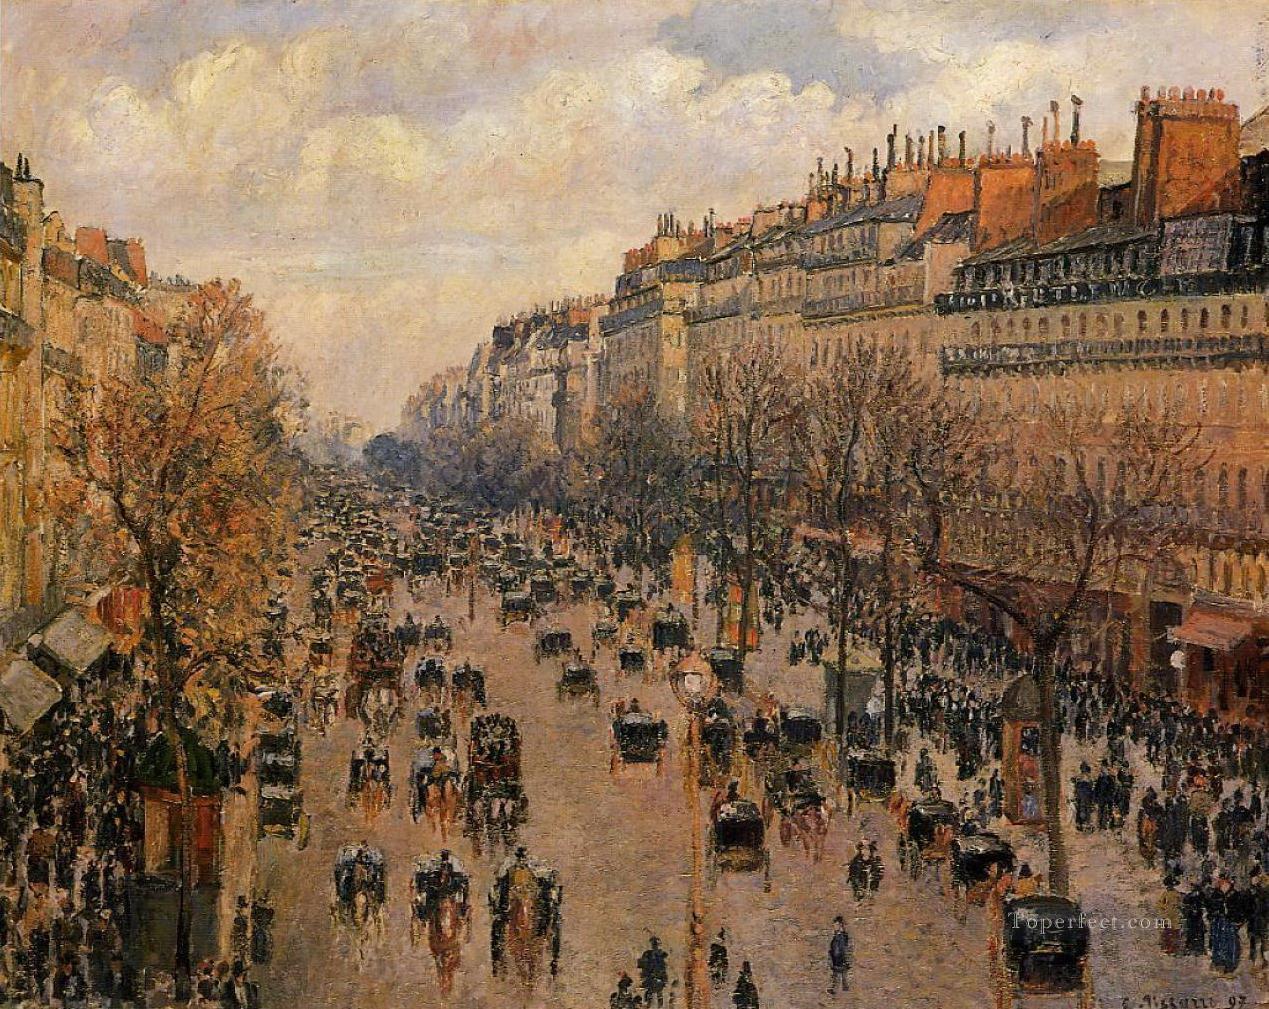 Boulevard Montmartre la luz del sol de la tarde 1897 Camille Pissarro parisino Pintura al óleo